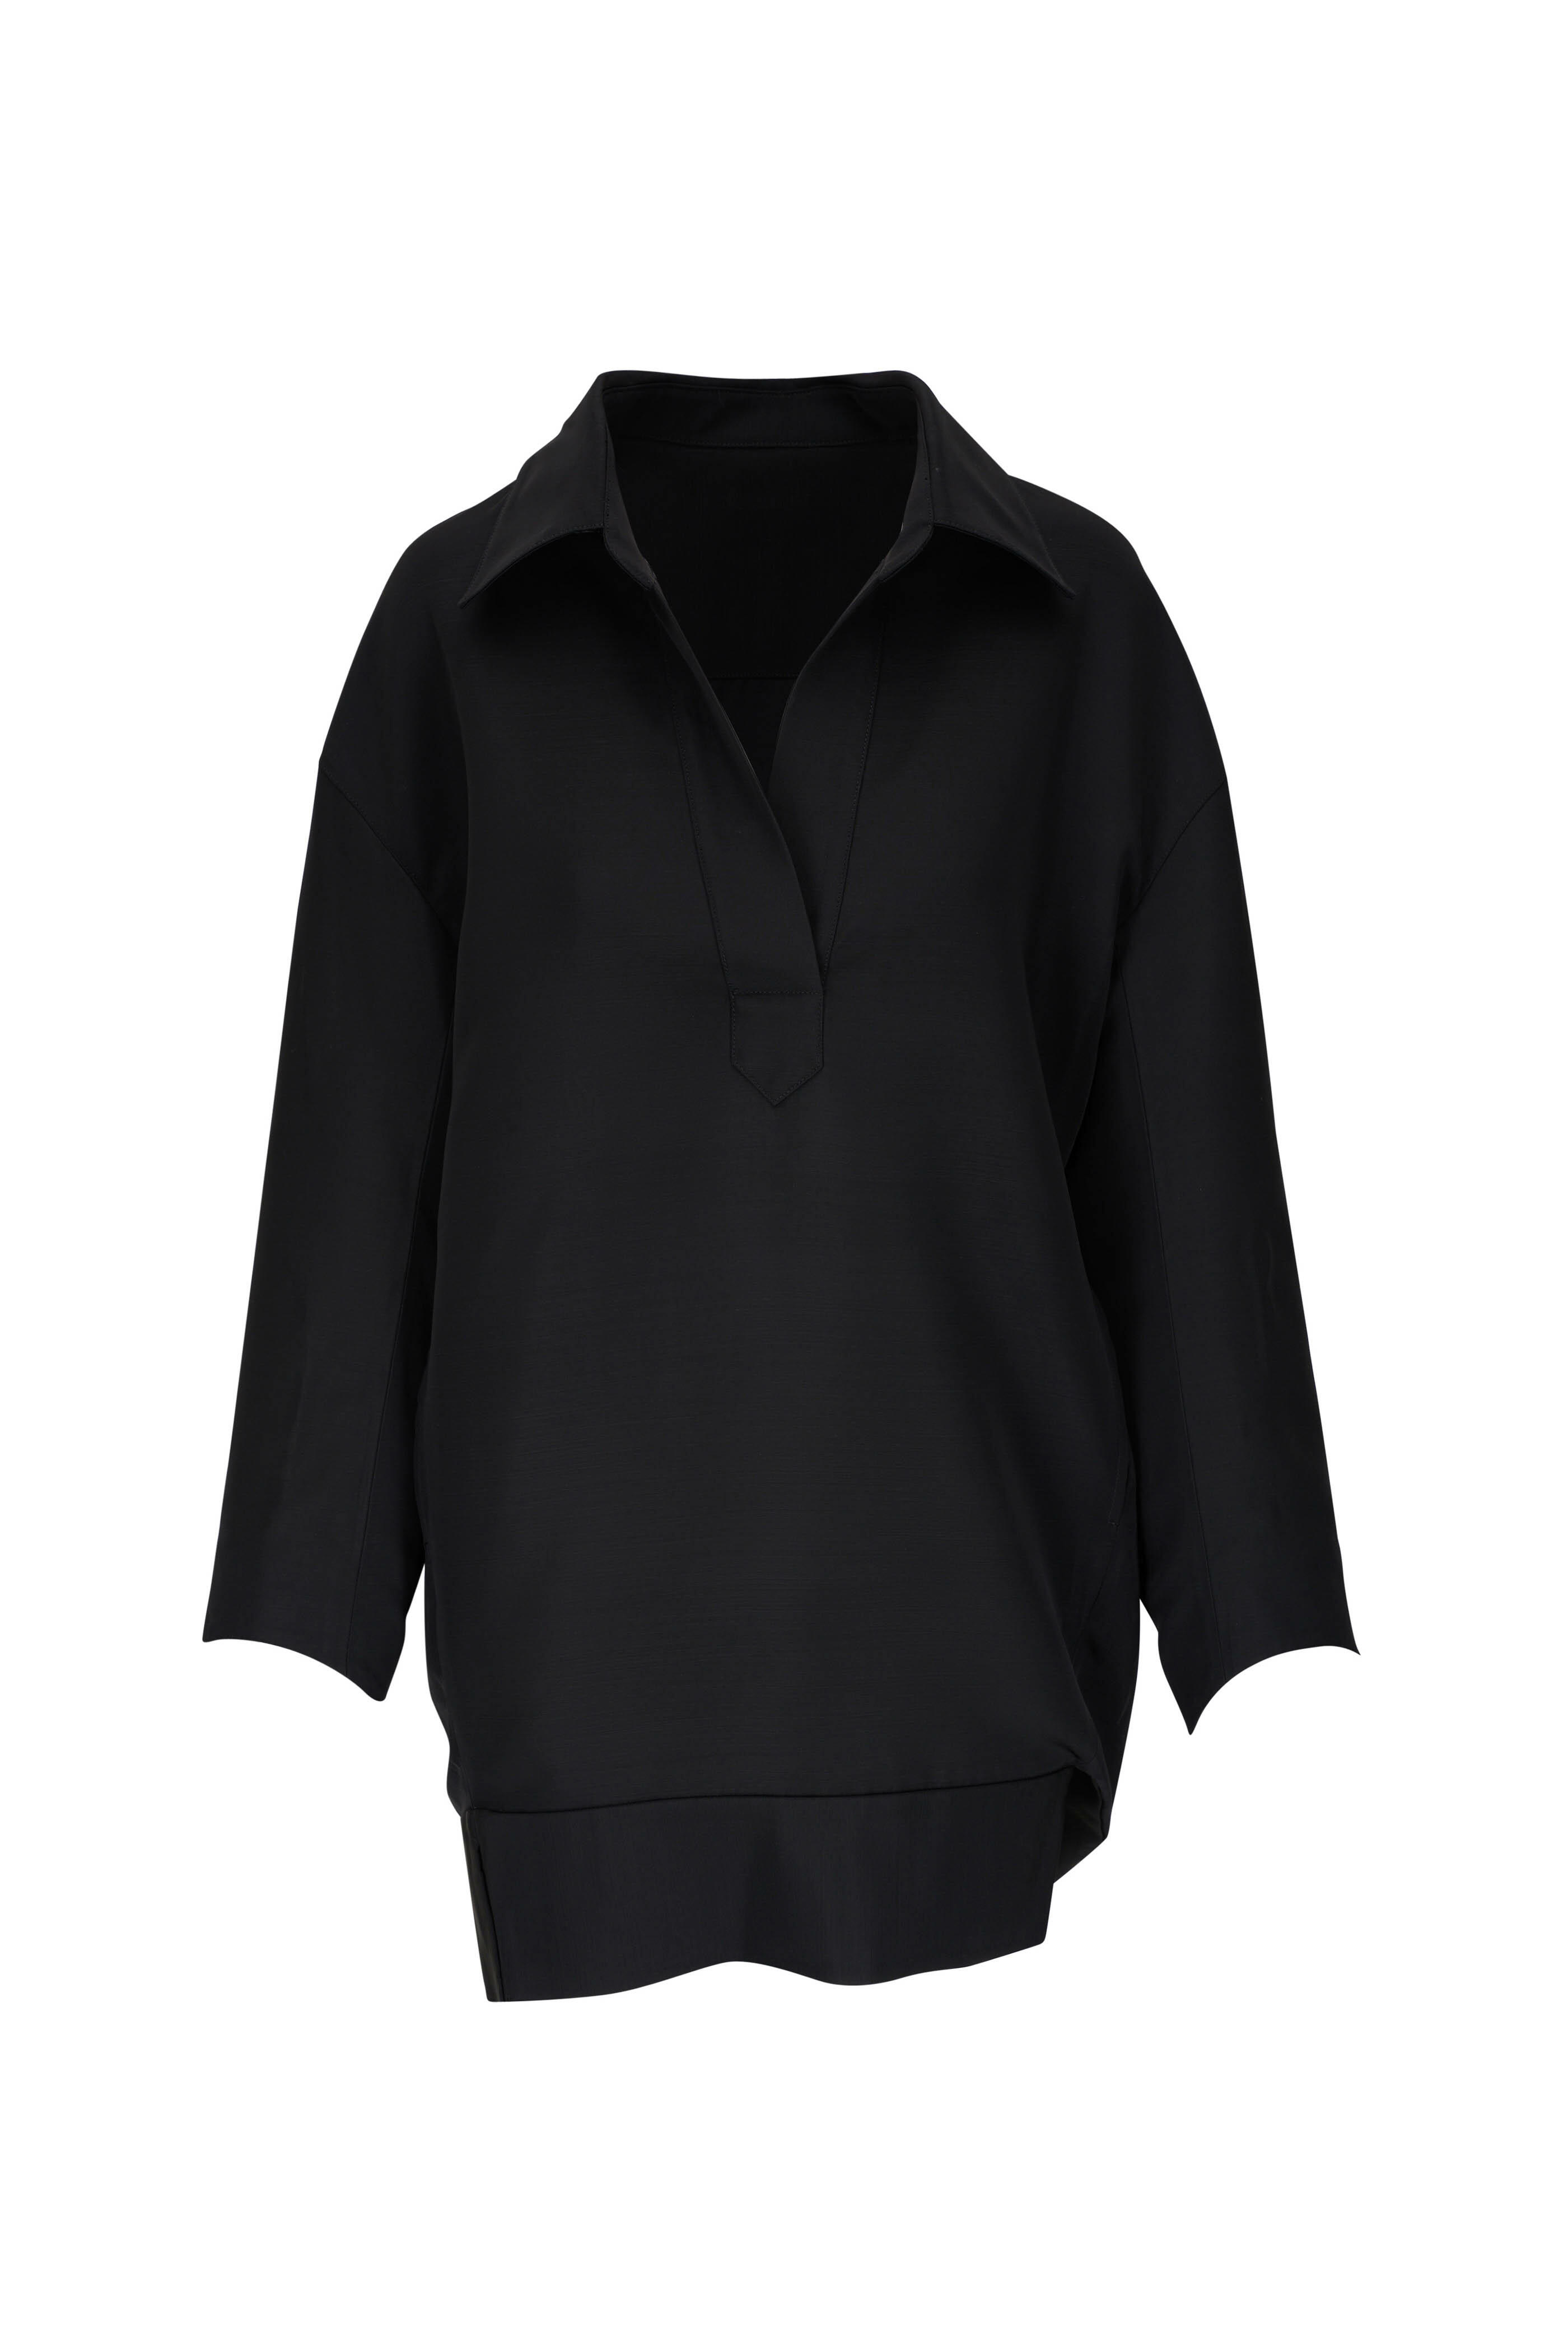 Khaite - Kal Black Shirt Dress | Mitchell Stores